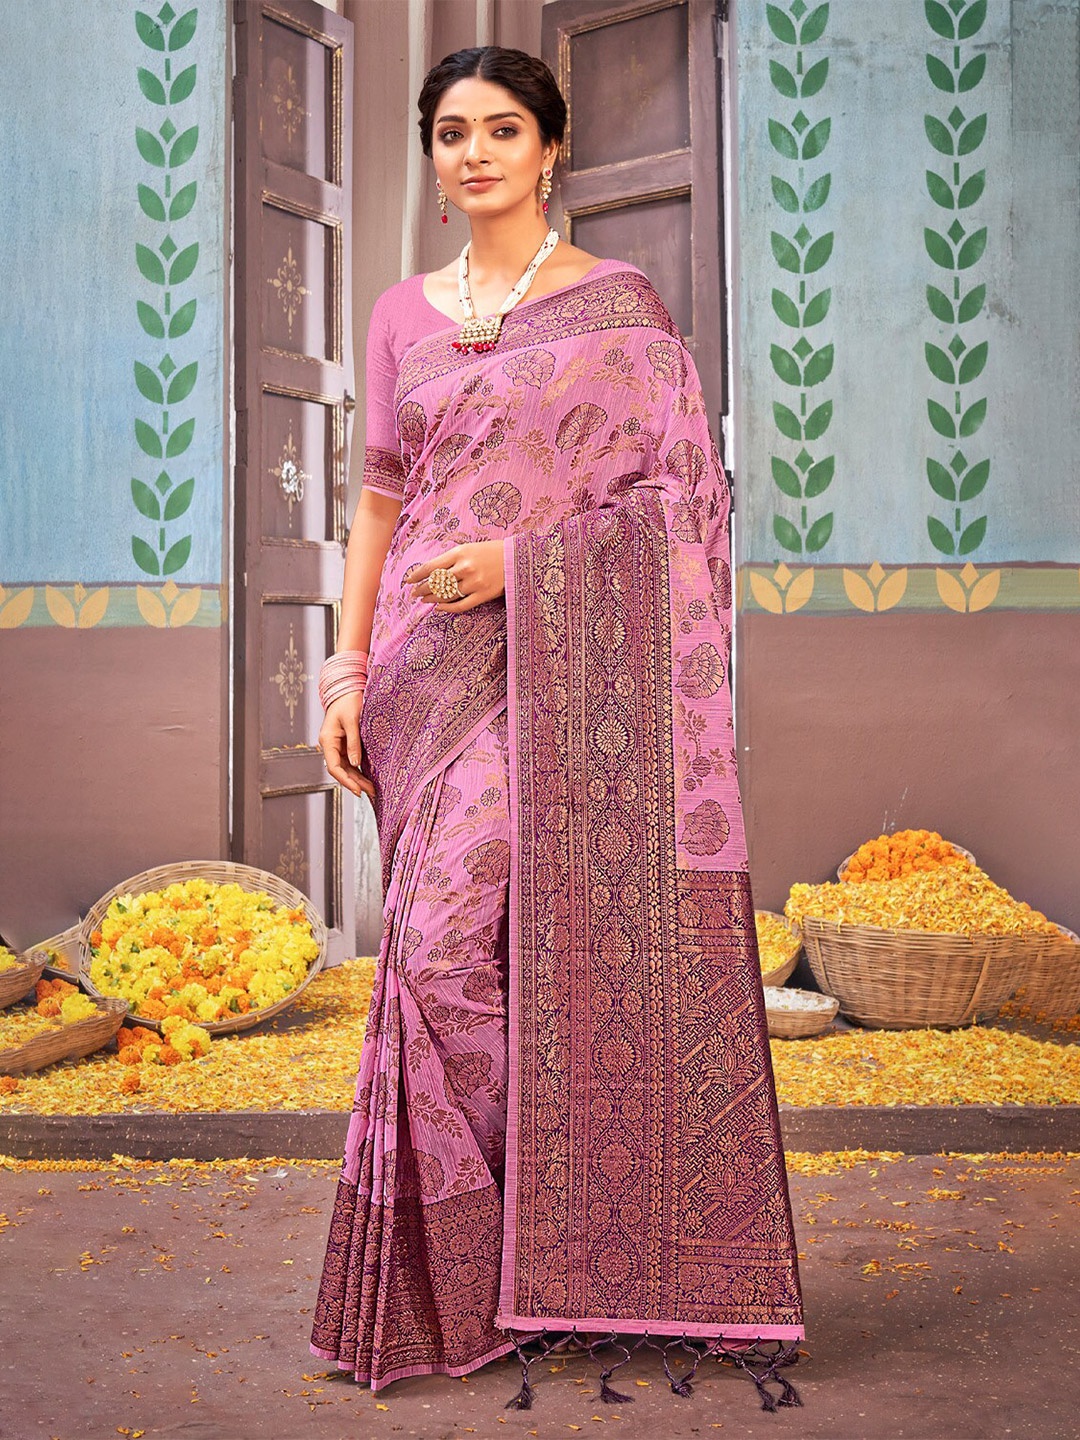 

SANGAM PRINTS Pink & Gold-Toned Ethnic Motifs Zari Saree